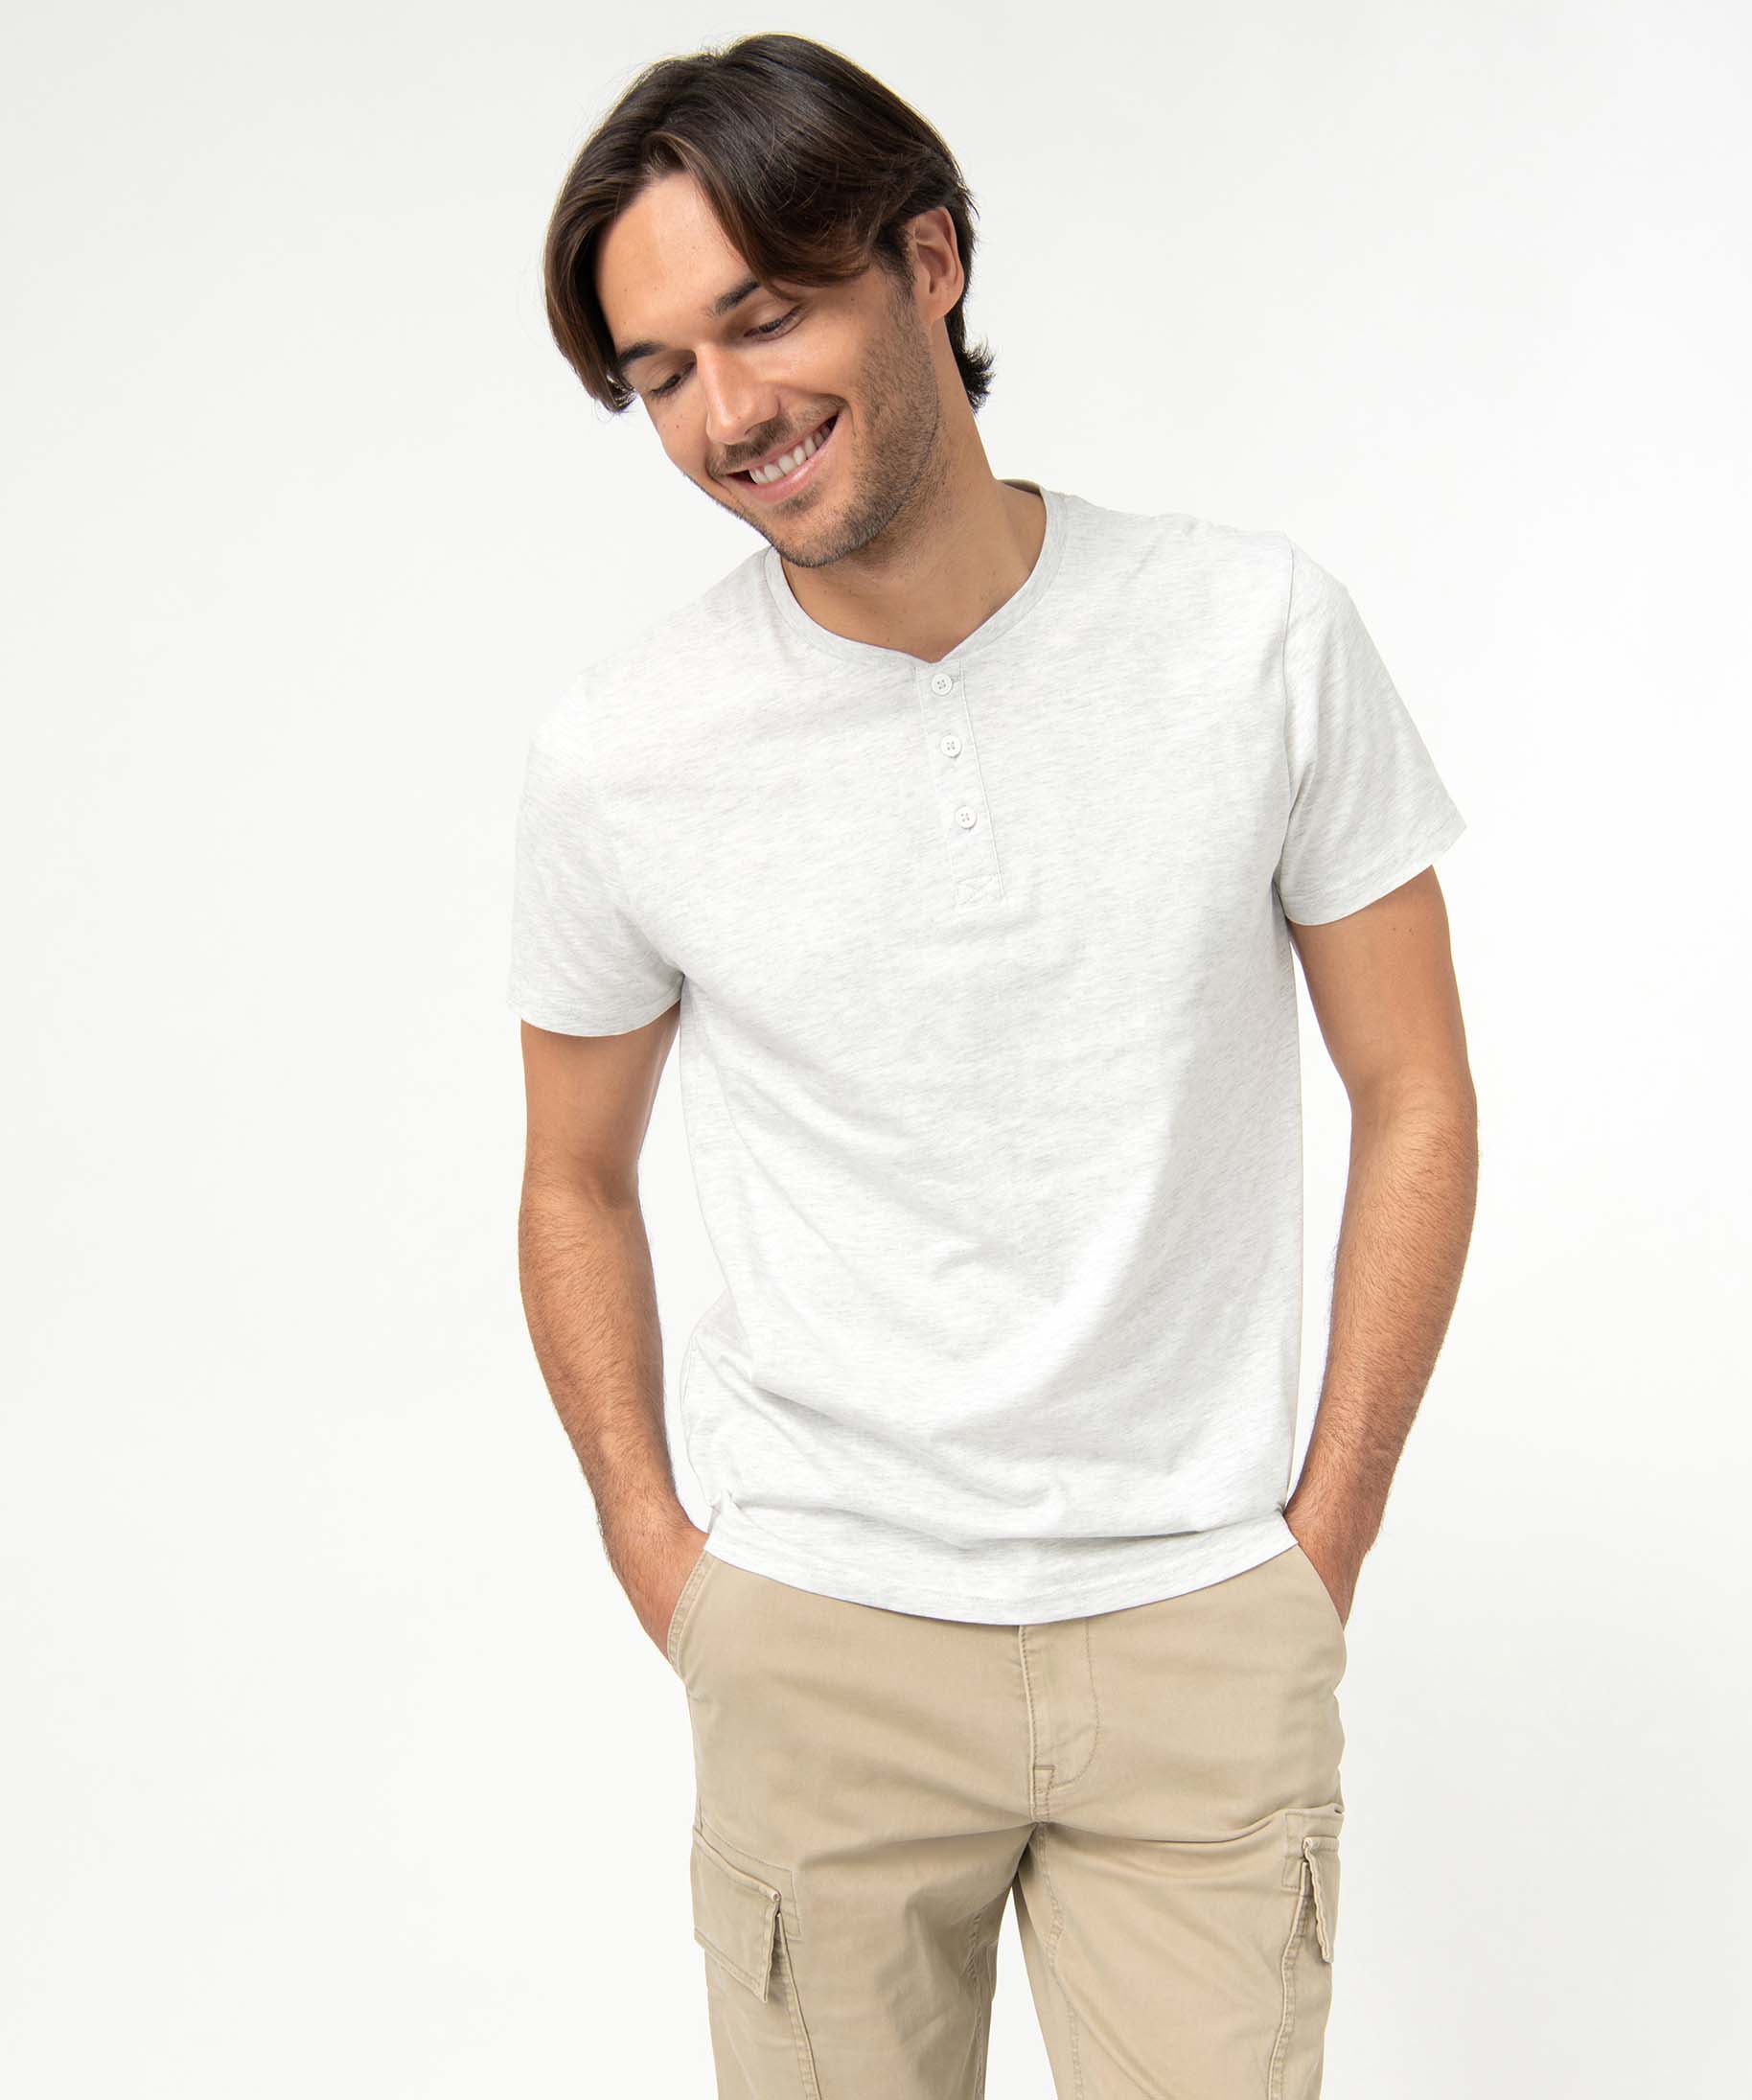 tee-shirt homme col tunisien a manches courtes blanc tee-shirts